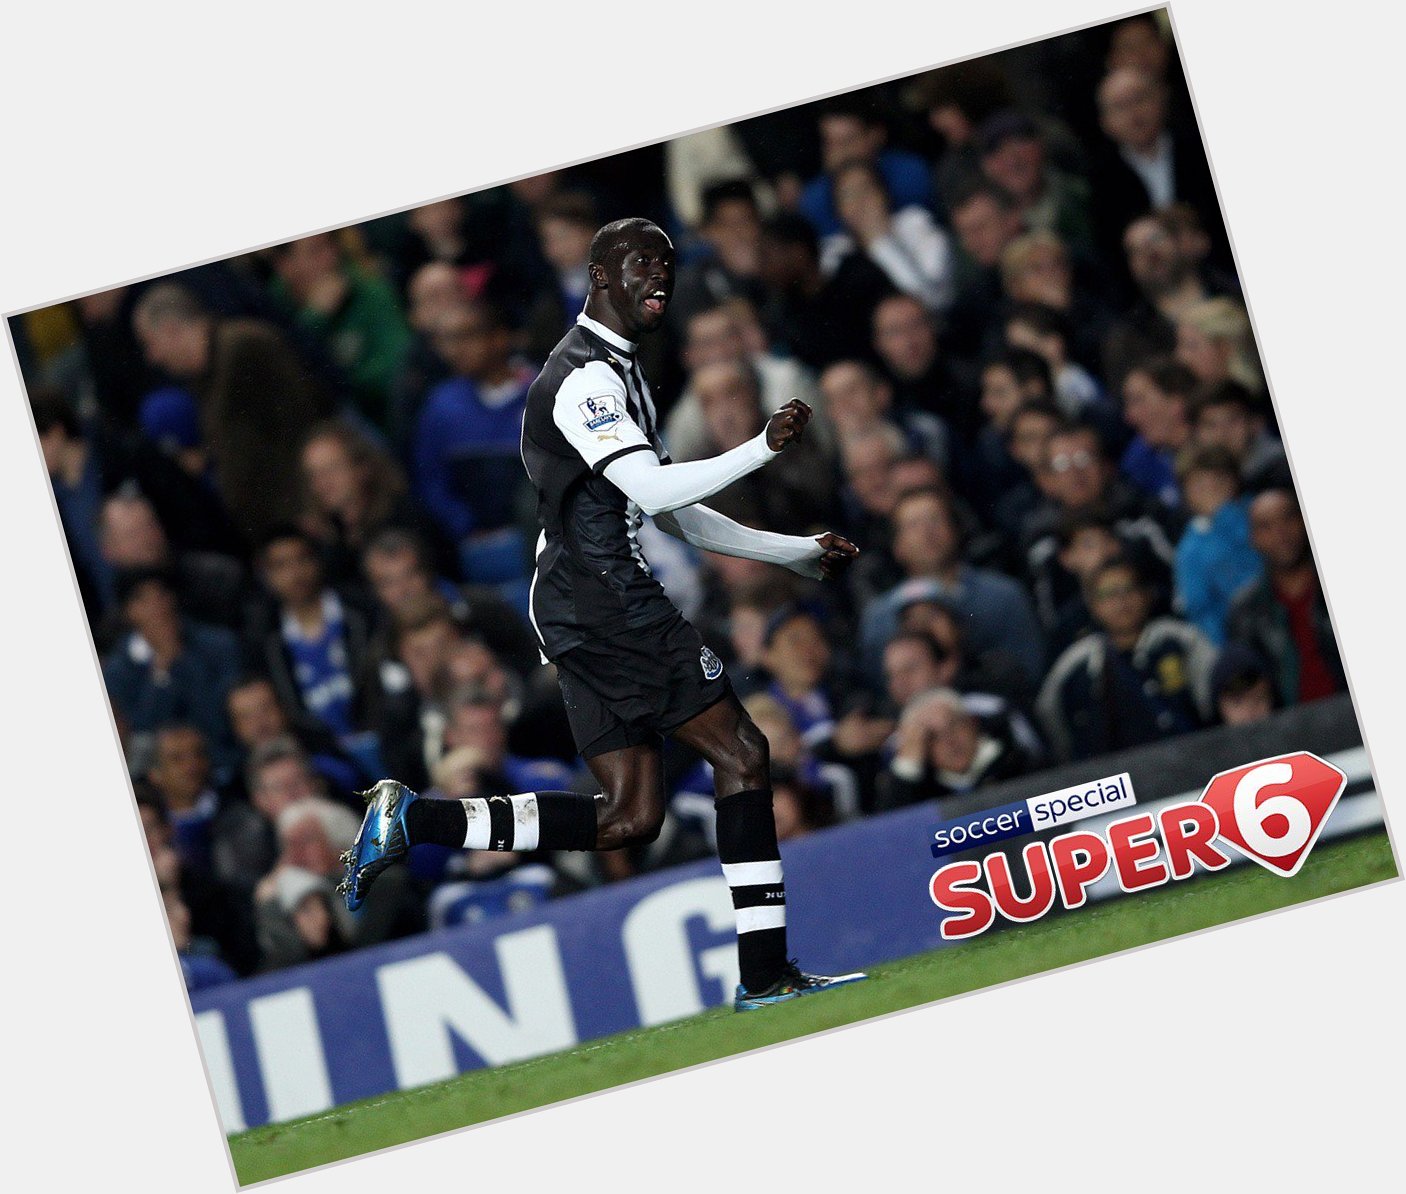  Happy Birthday Papiss Cissé. 

Tap  if you remember THAT goal against Chelsea. 